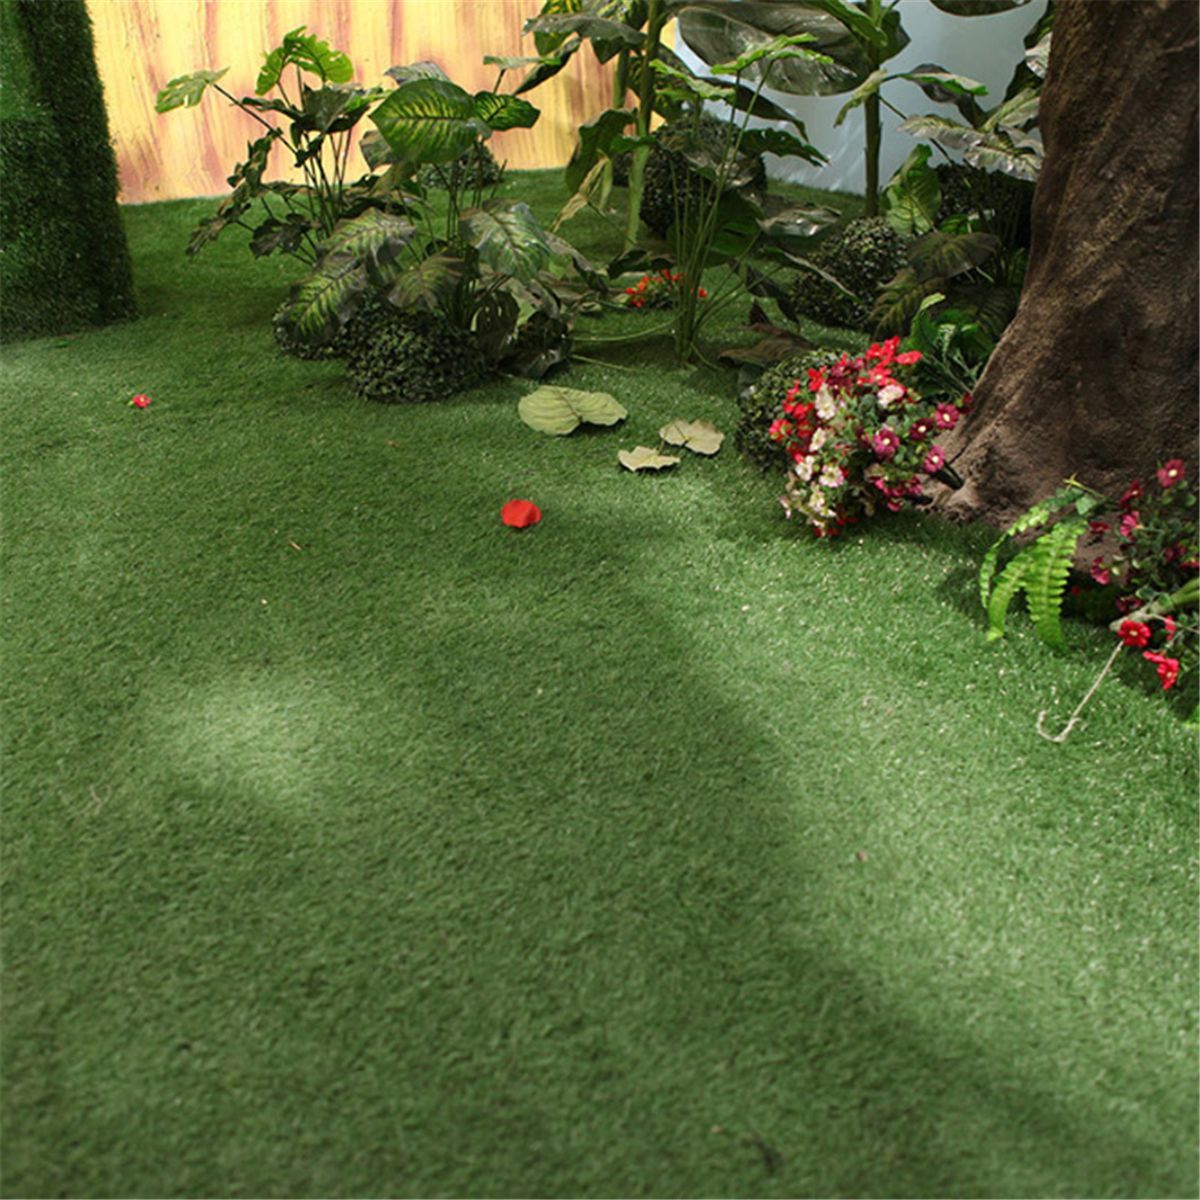 10mm-Artificial-Grass-Mat-Lawn-Synthetic-Green-Yard-Garden-Indoor-Outdoor-1739021